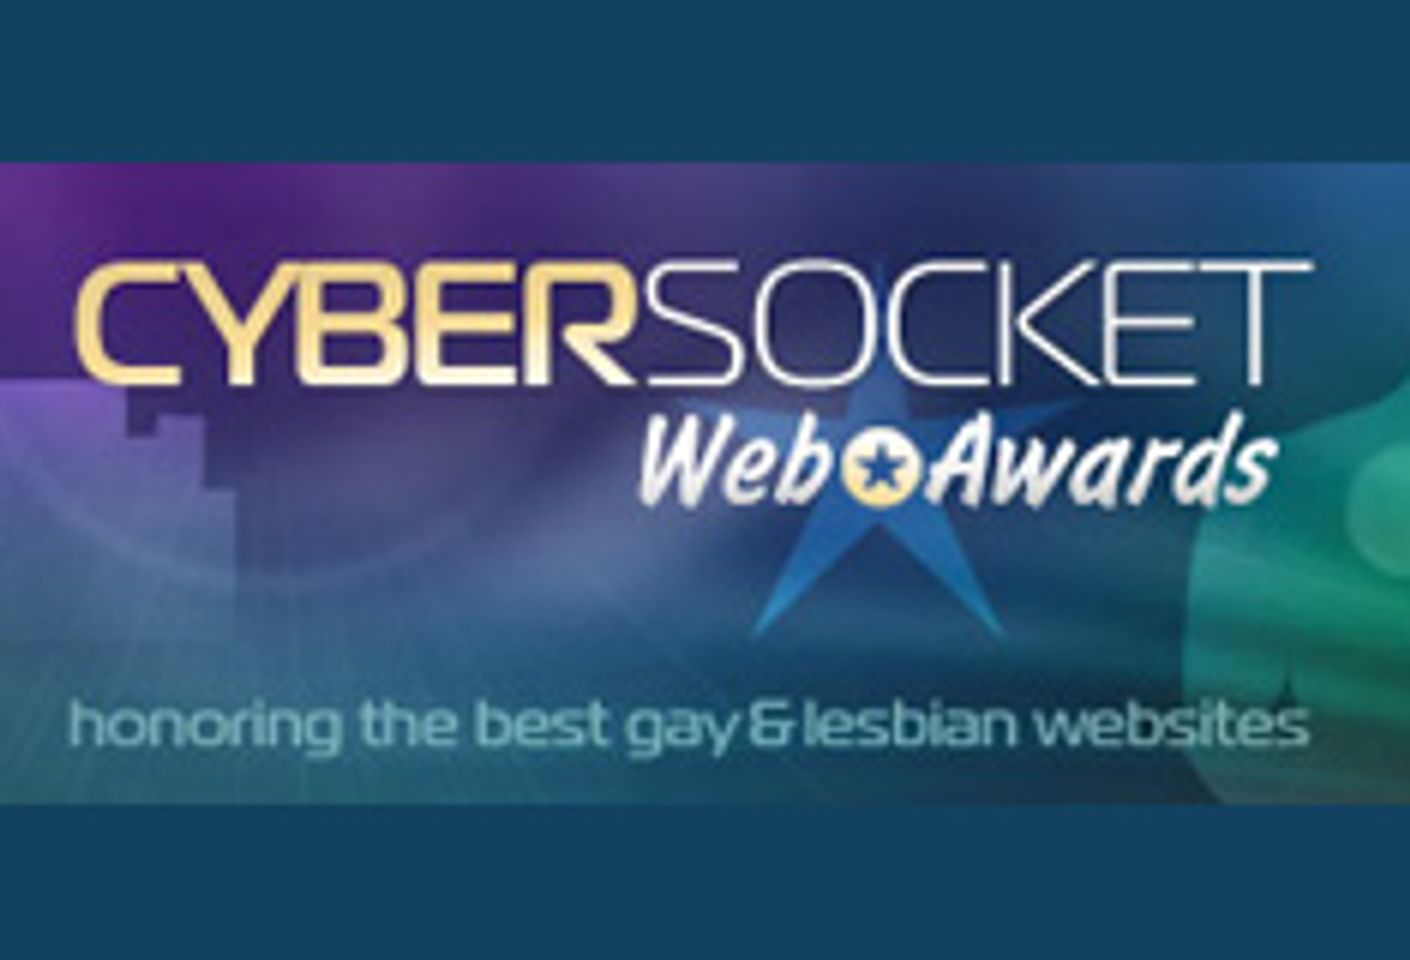 12th Annual Cybersocket Web Award Winners Announced